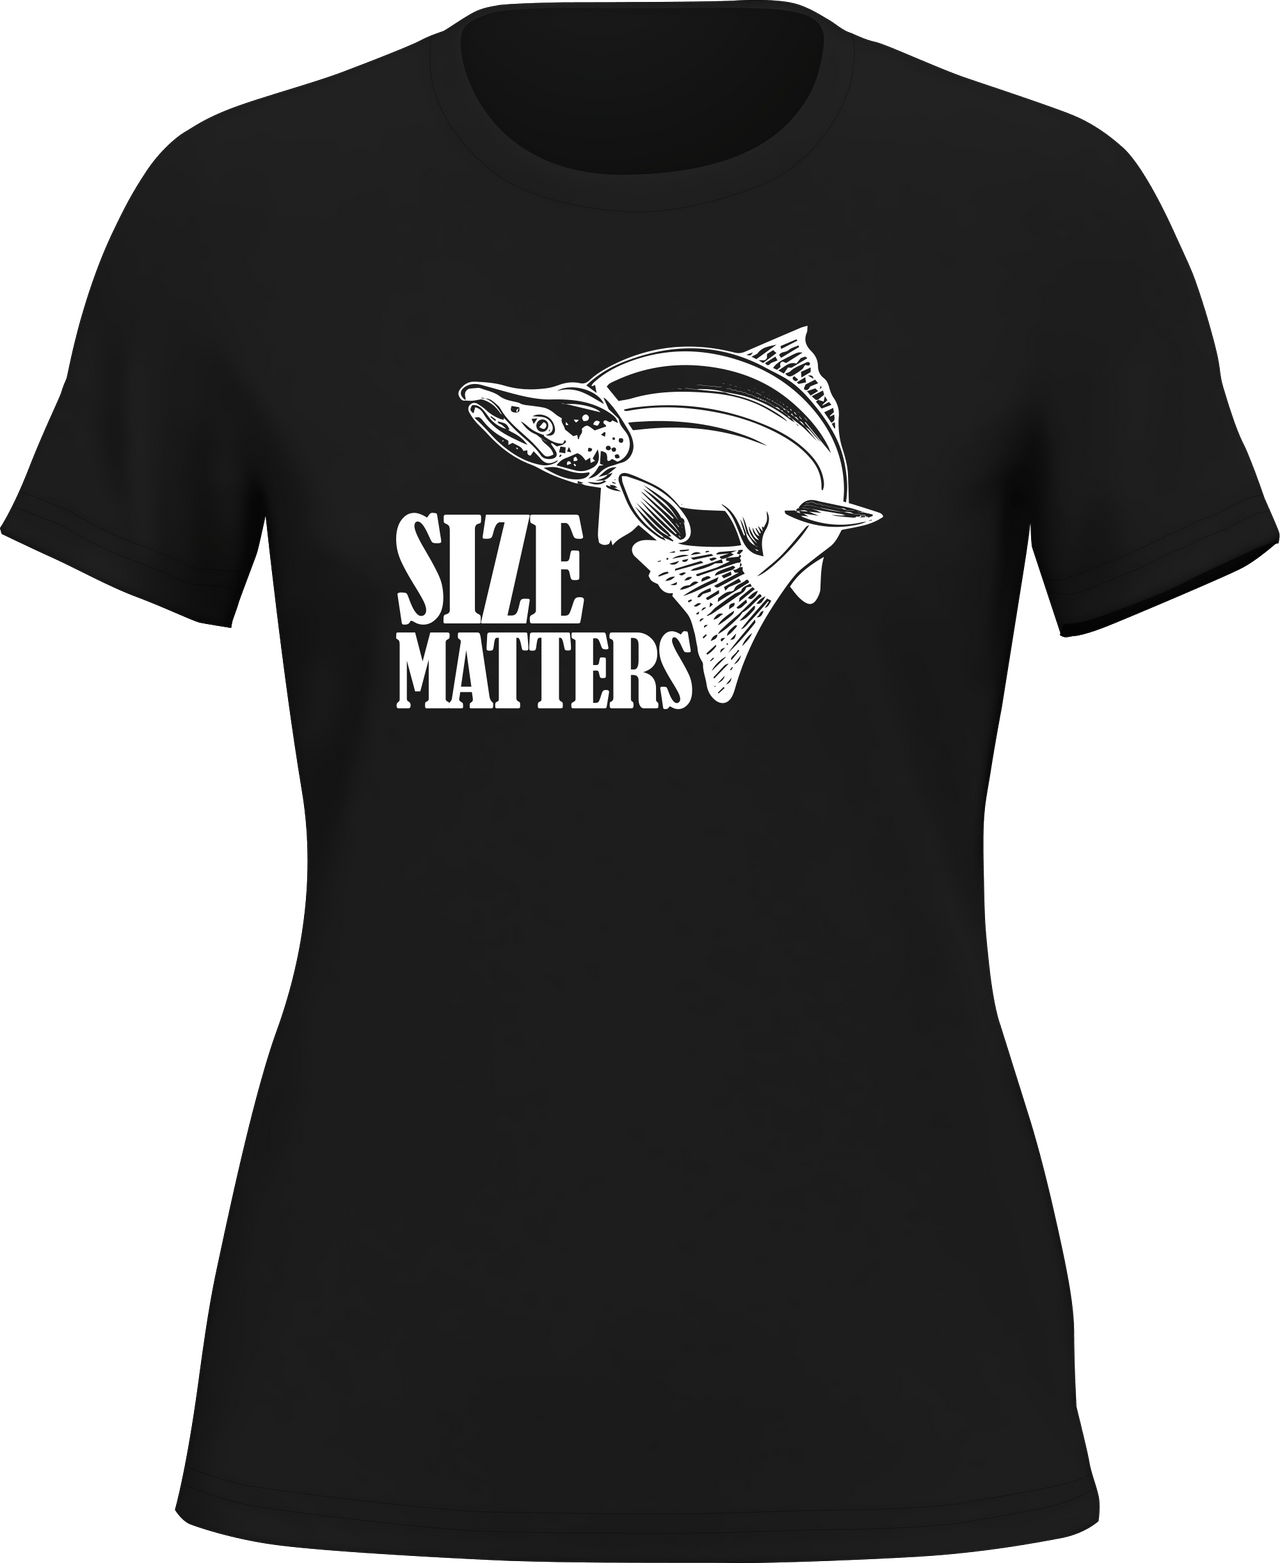 Size Matters T-Shirt for Women